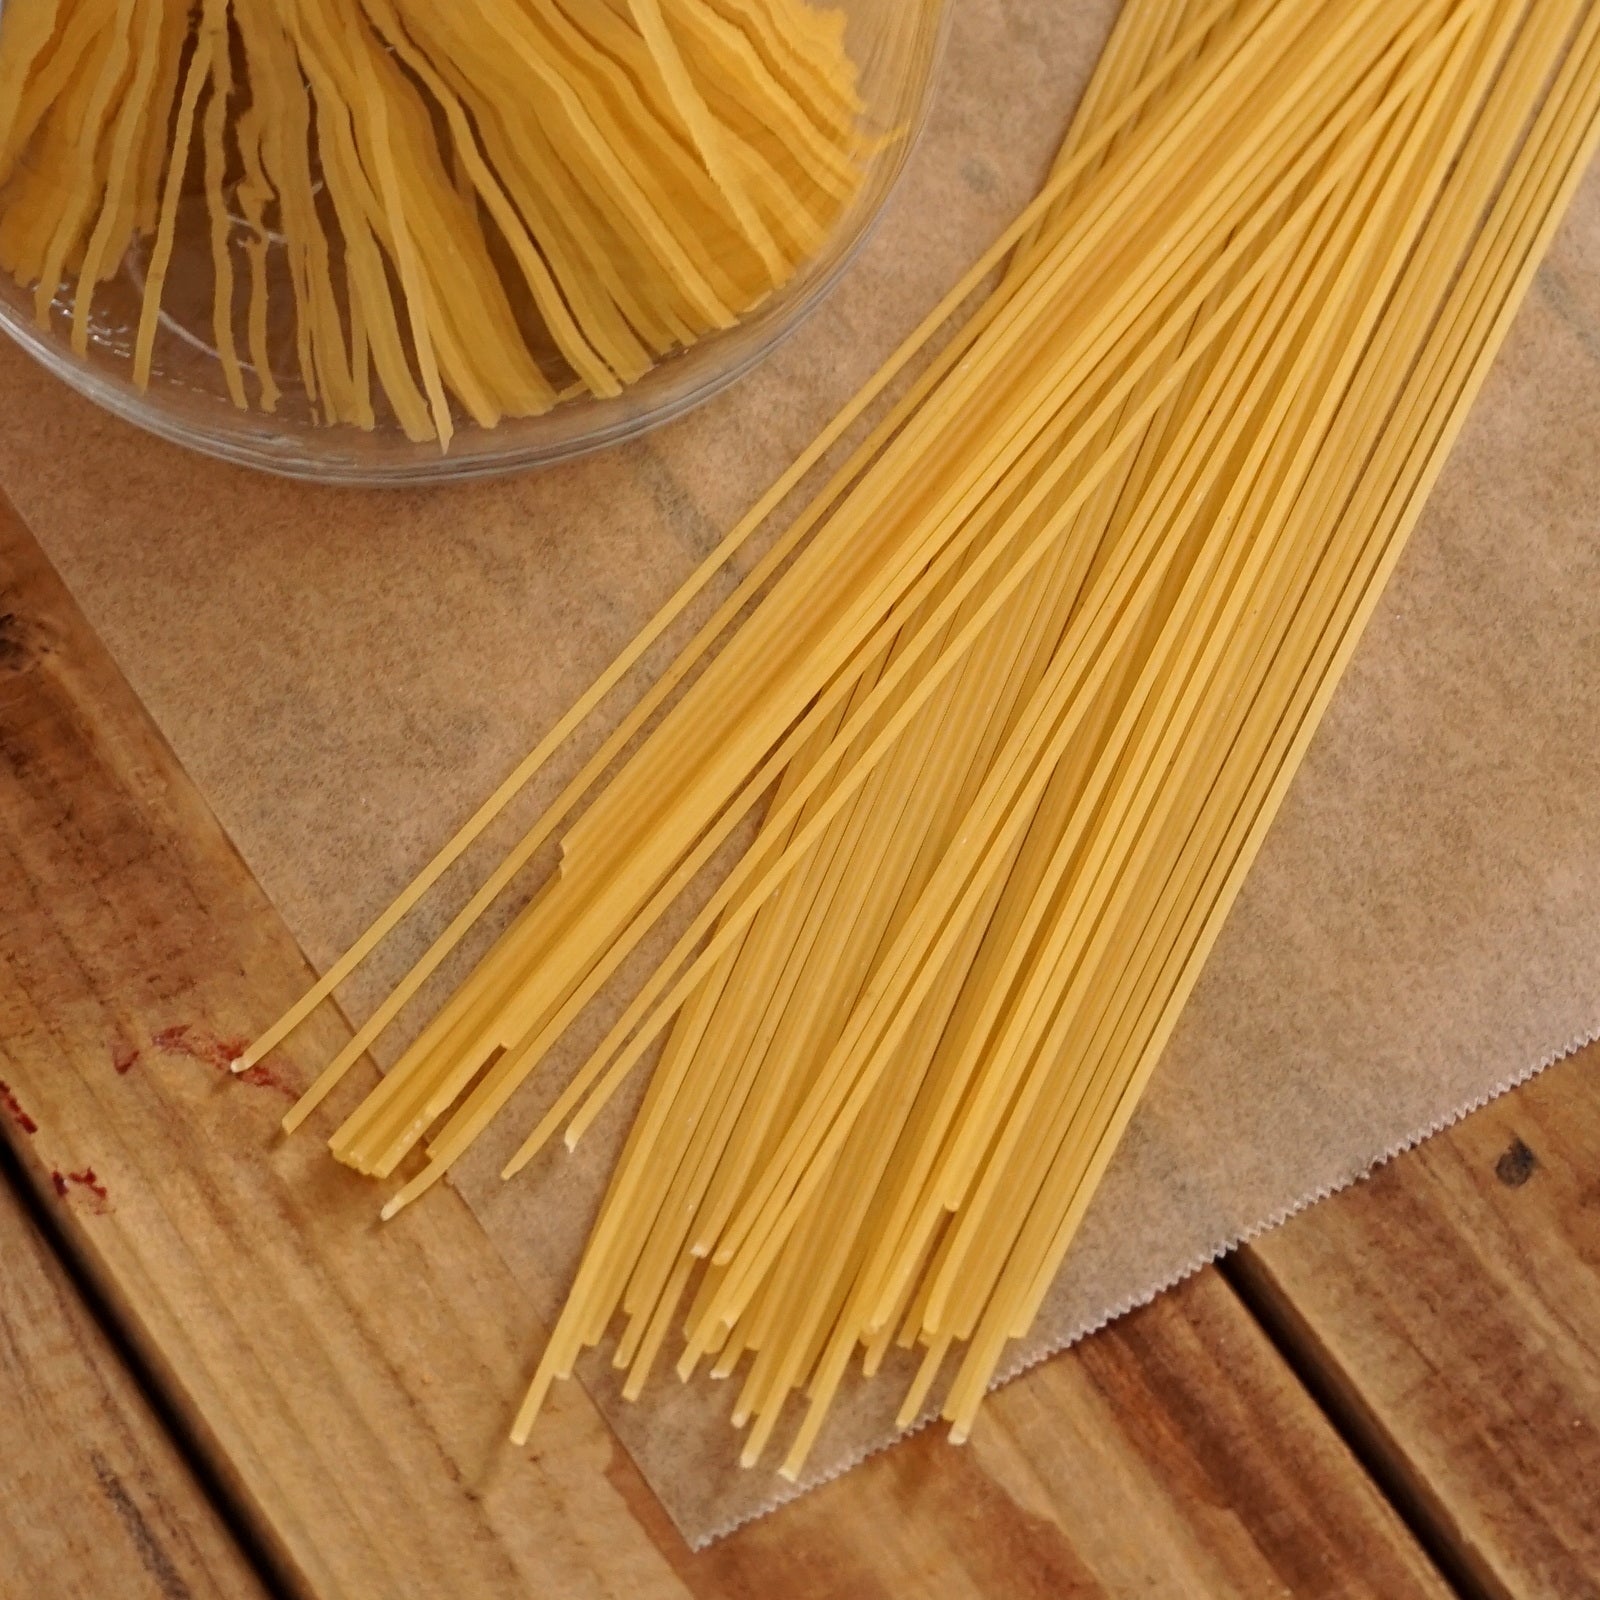 Certified Organic Spaghetti Pasta from Italy 1.7mm (500g x 3) - Horizon Farms